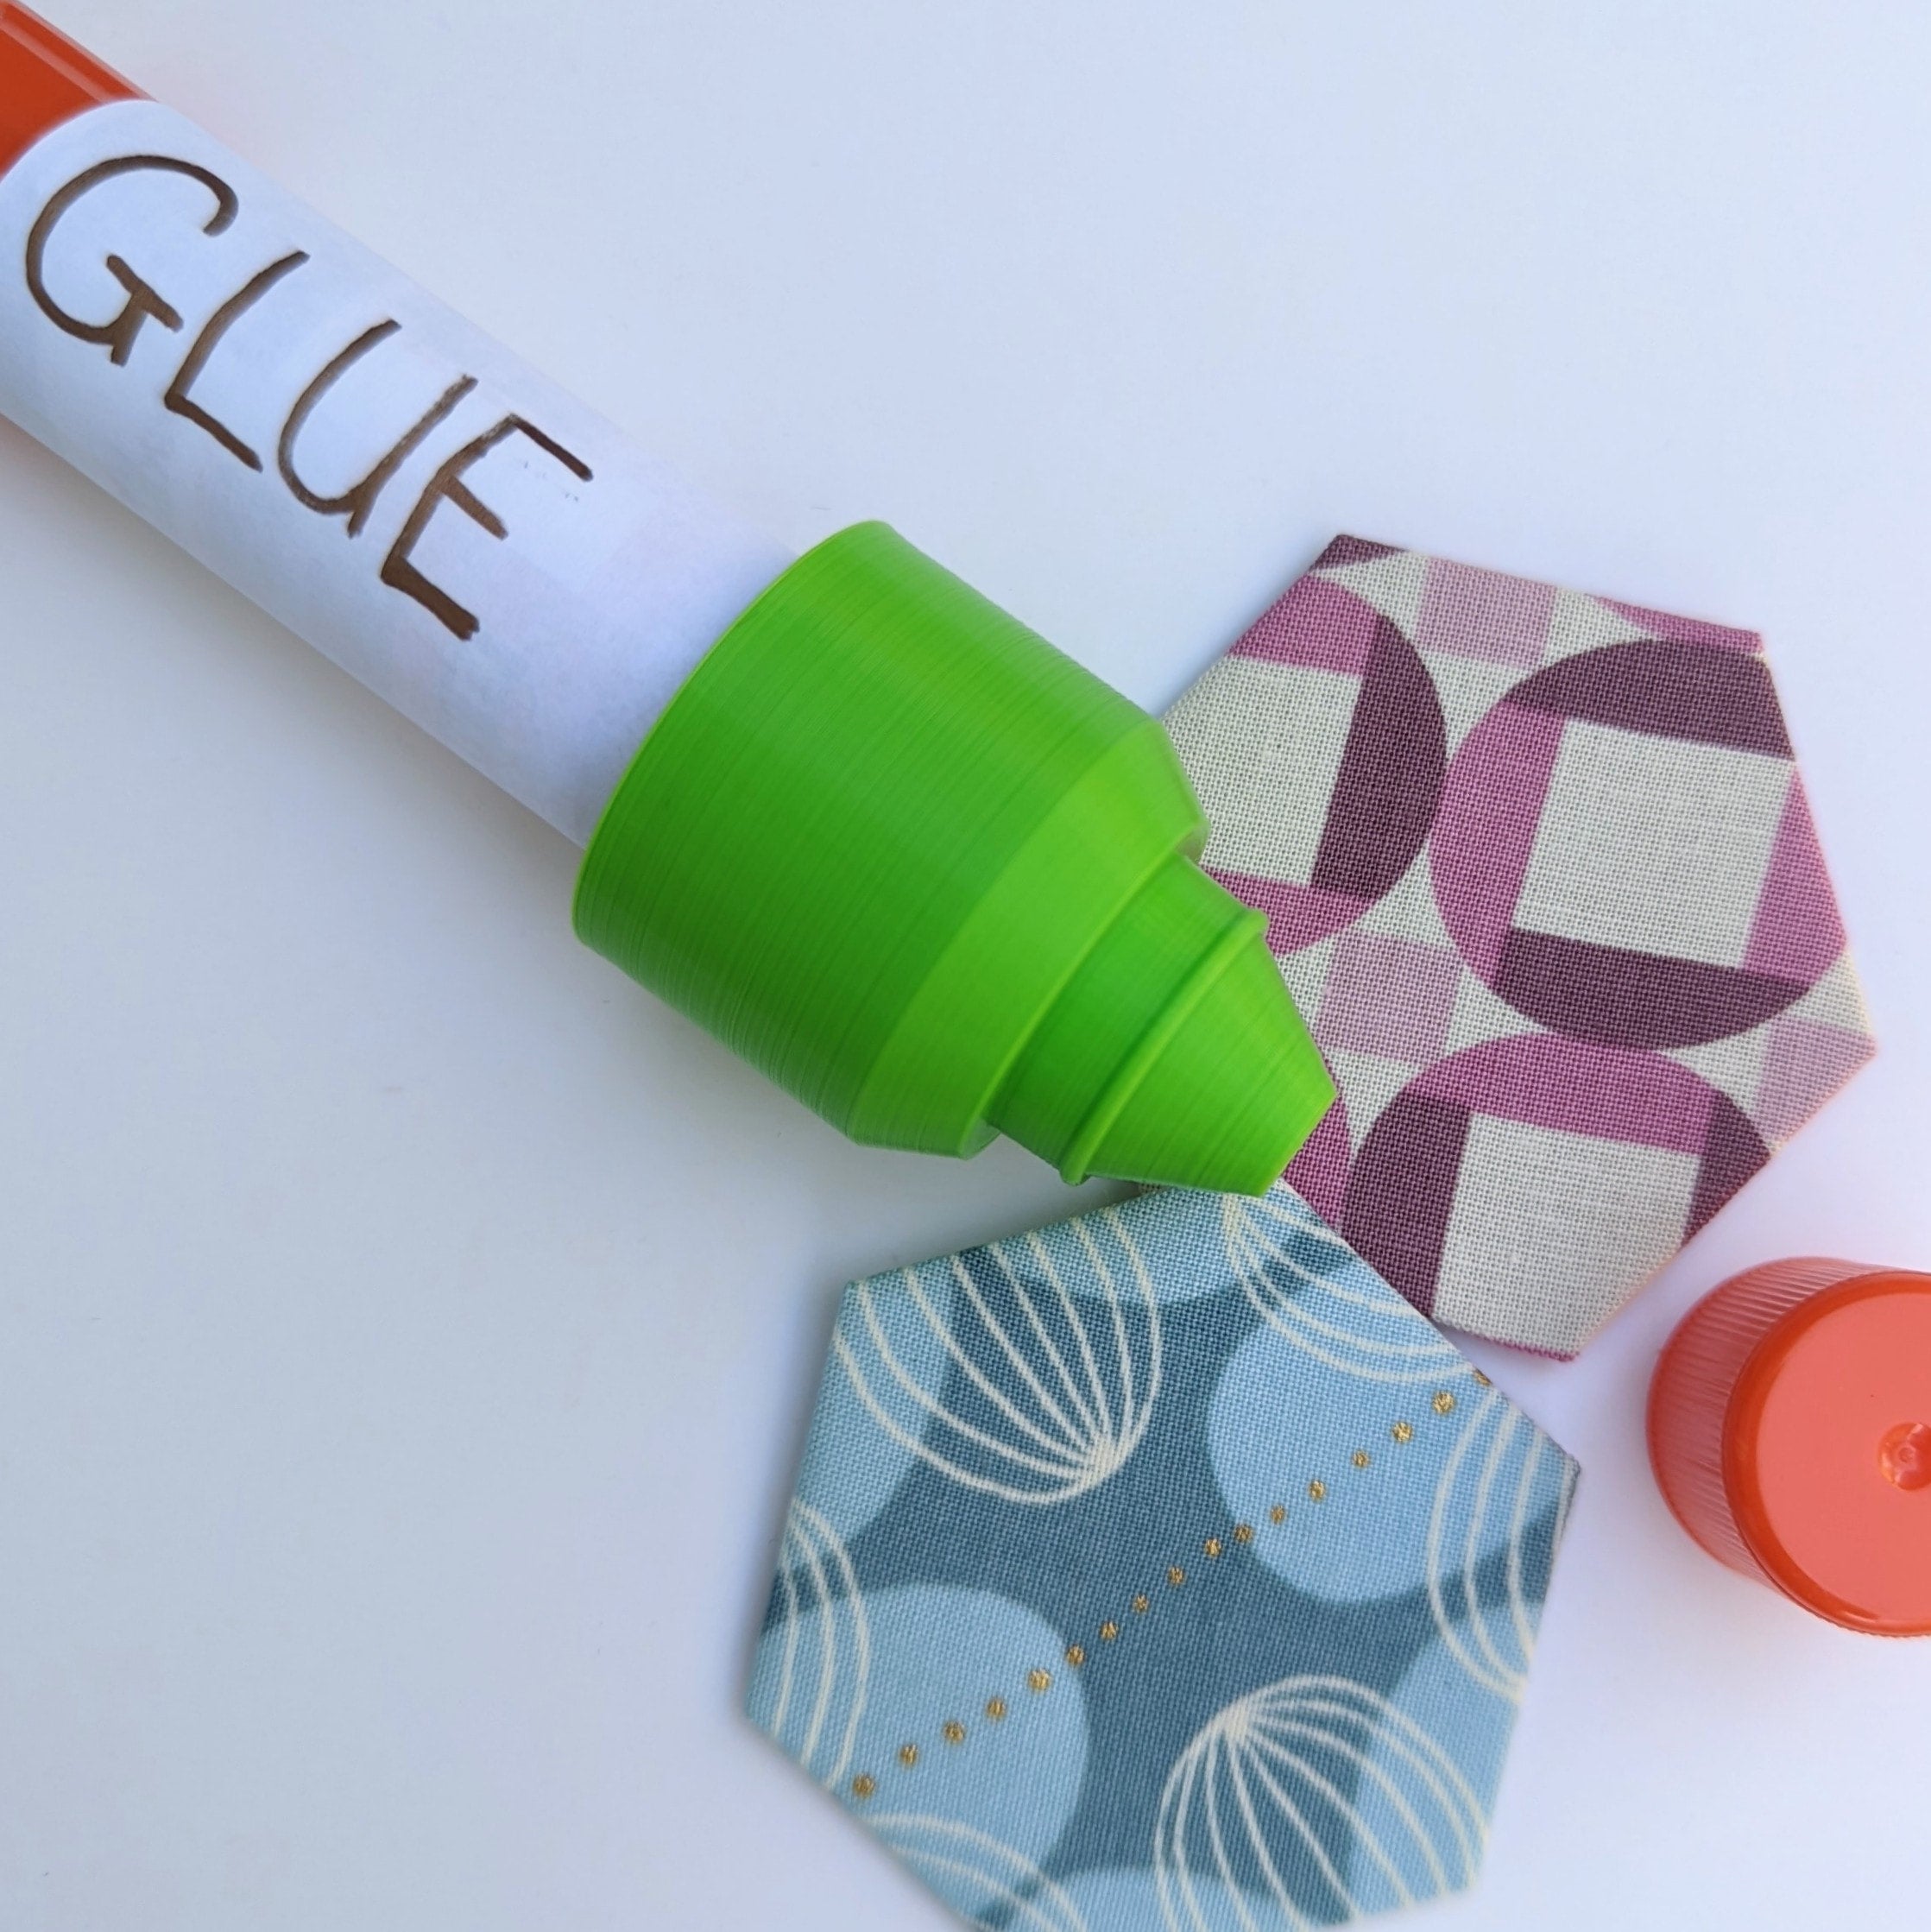 Edible Glue Stick Craft